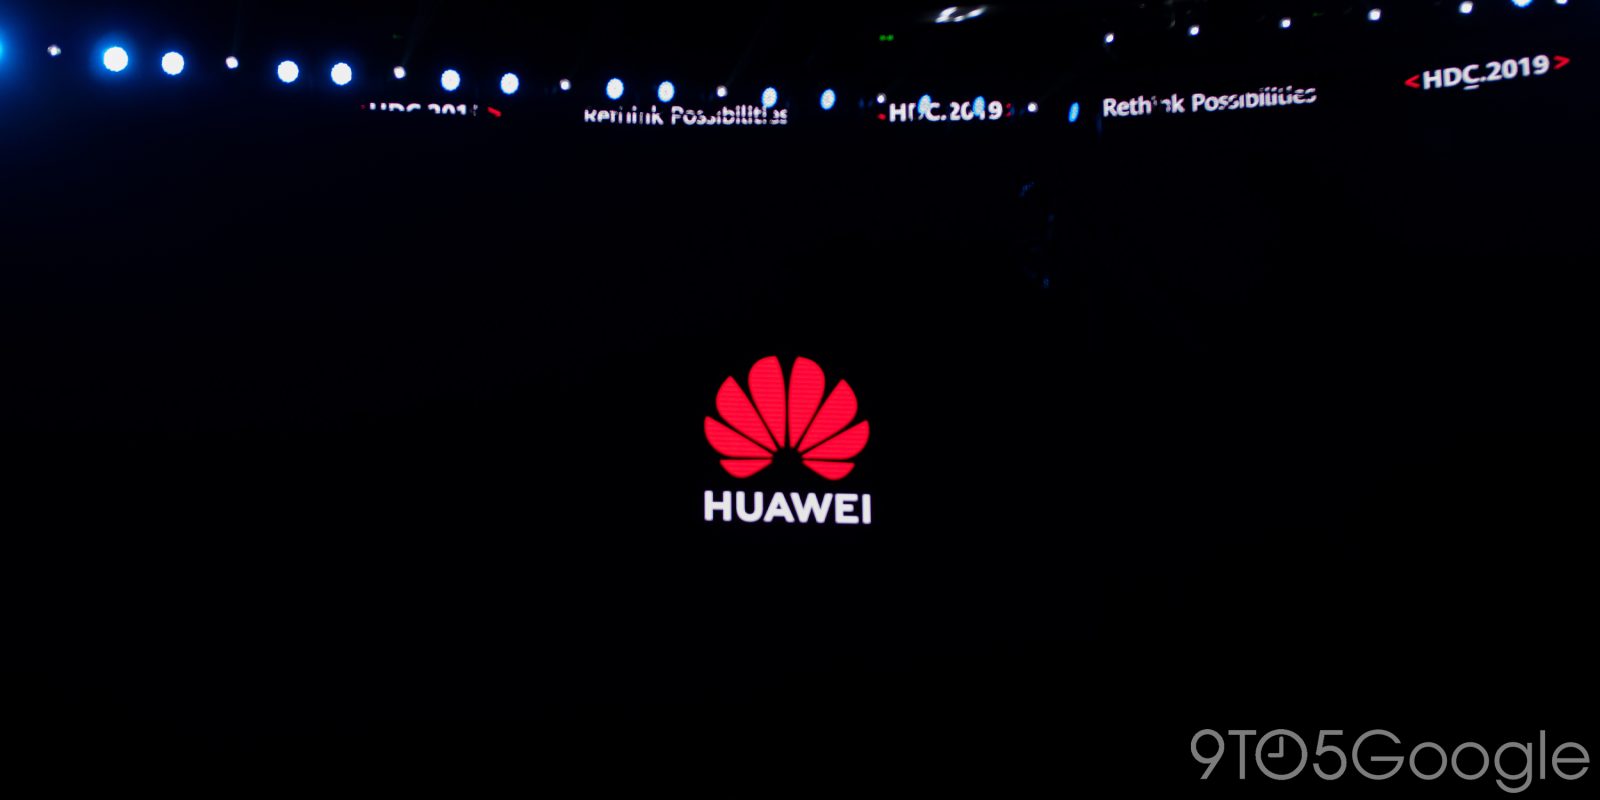 Huawei backdoor